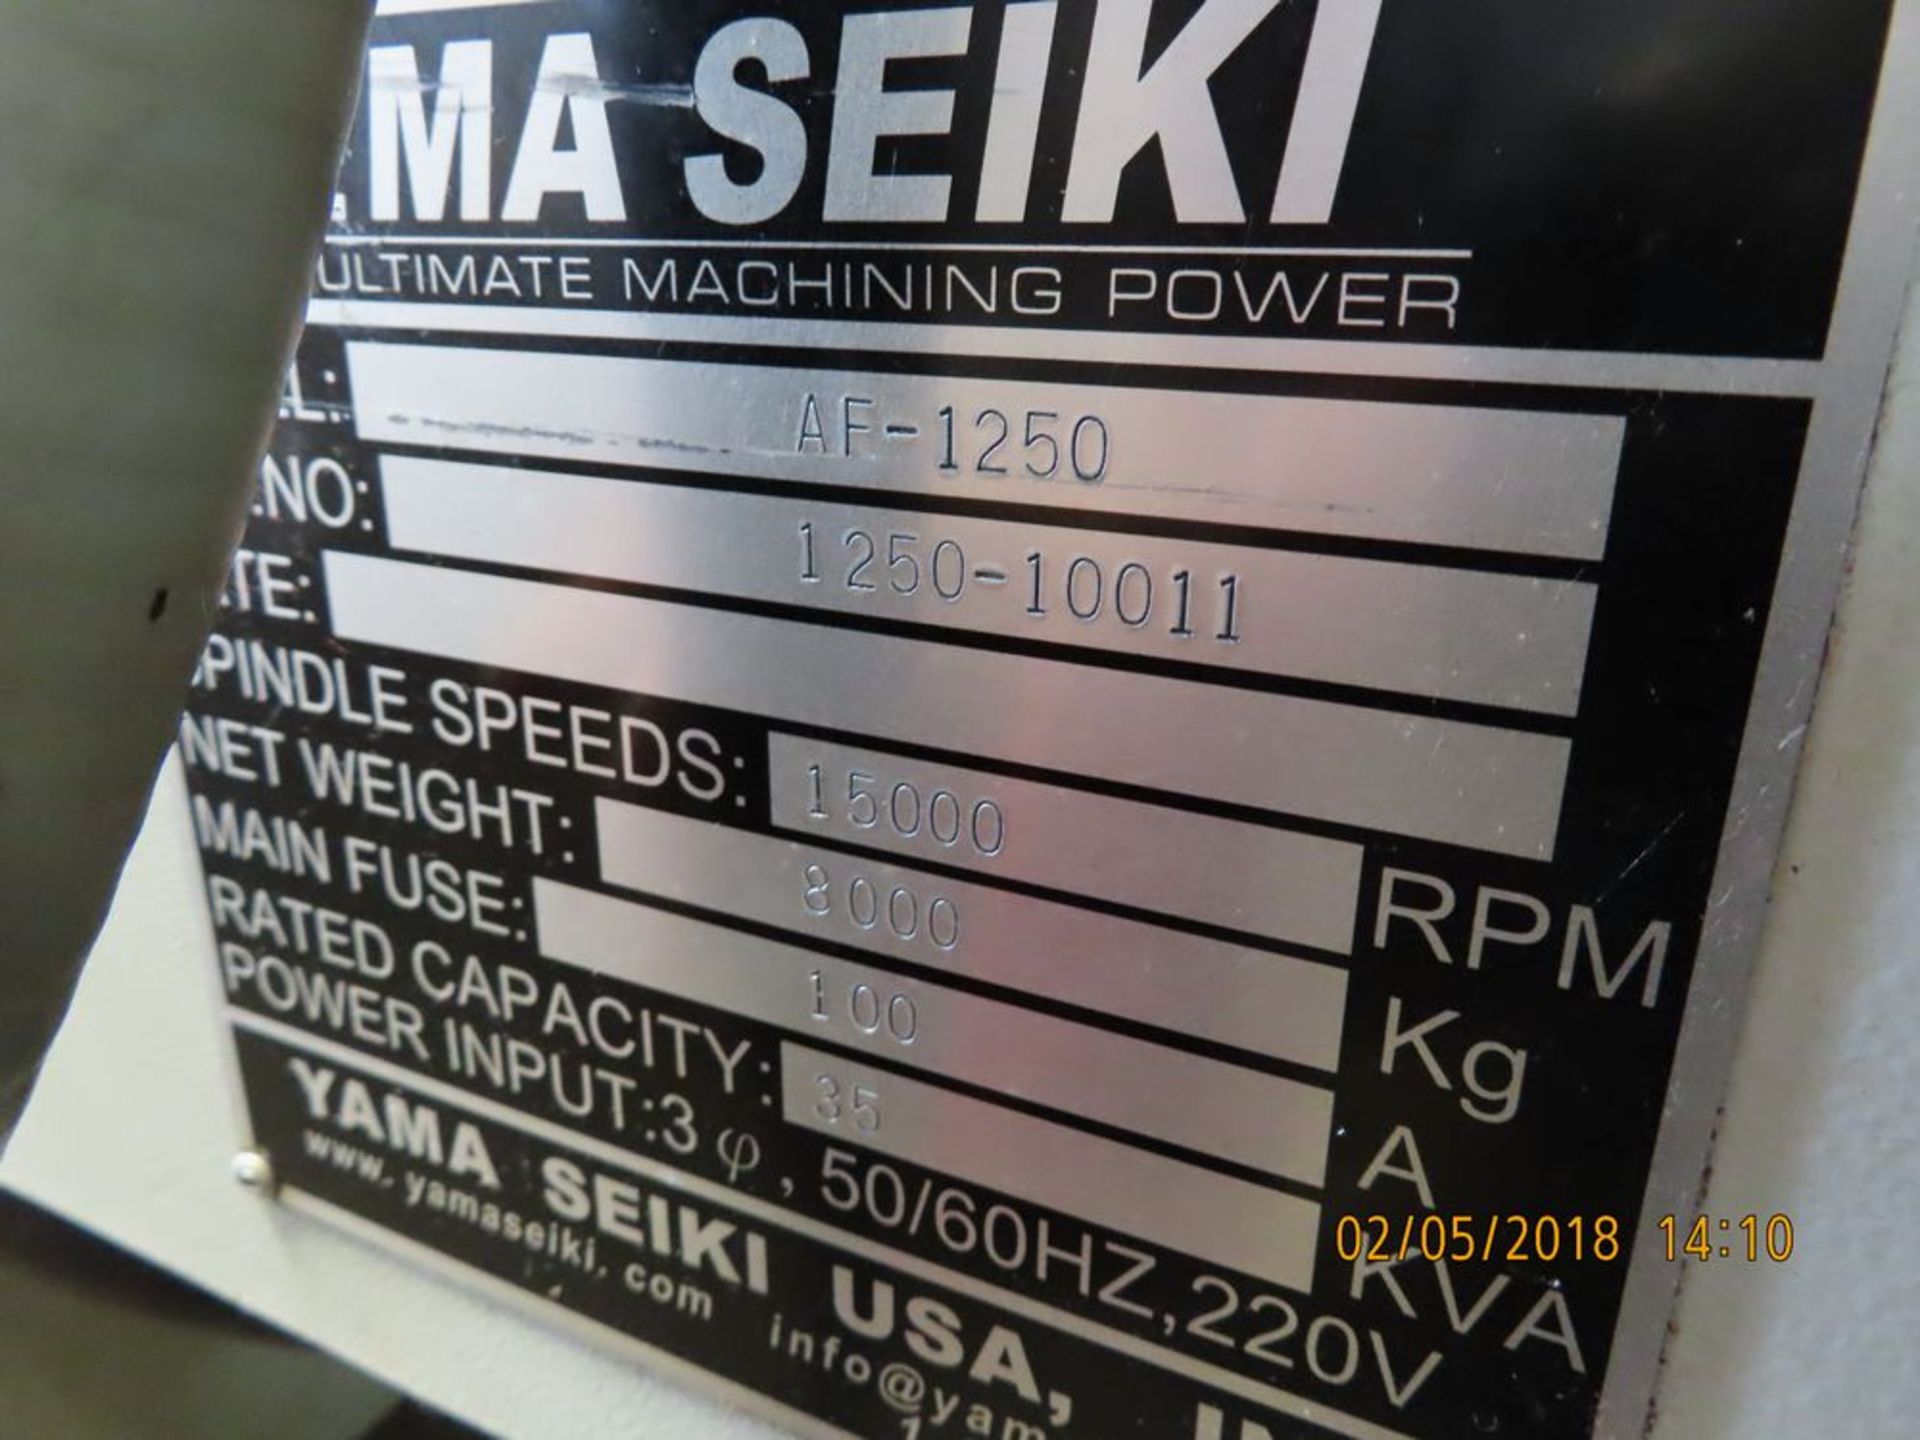 (2010) Yama Seiki mod. AF-1250, Vertical CNC Machine Center w/ Fanuc Series 18i-MB Controls, 15, - Image 7 of 7